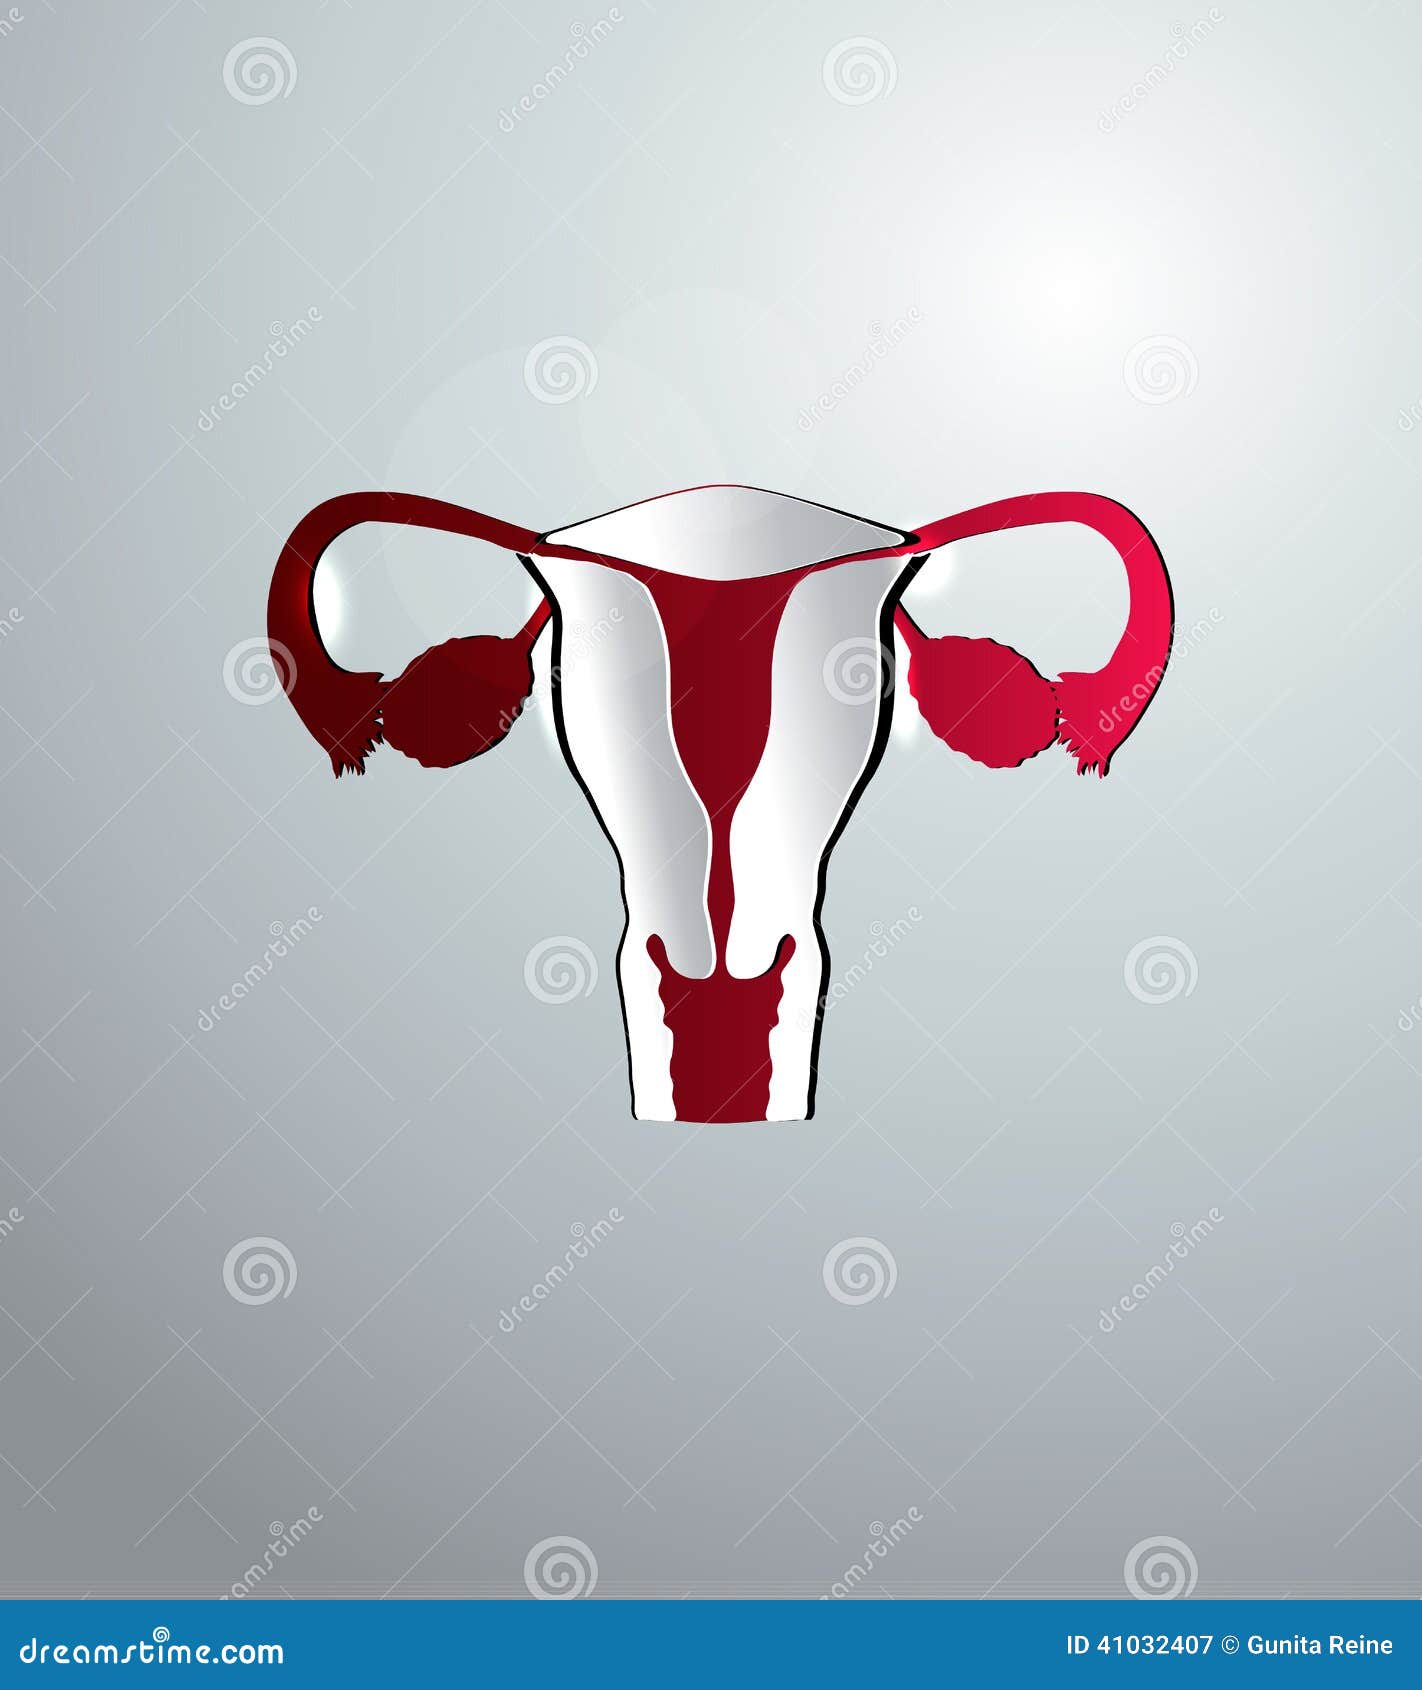 Abstract Female Uterus, Artistic Illustration Stock Vector